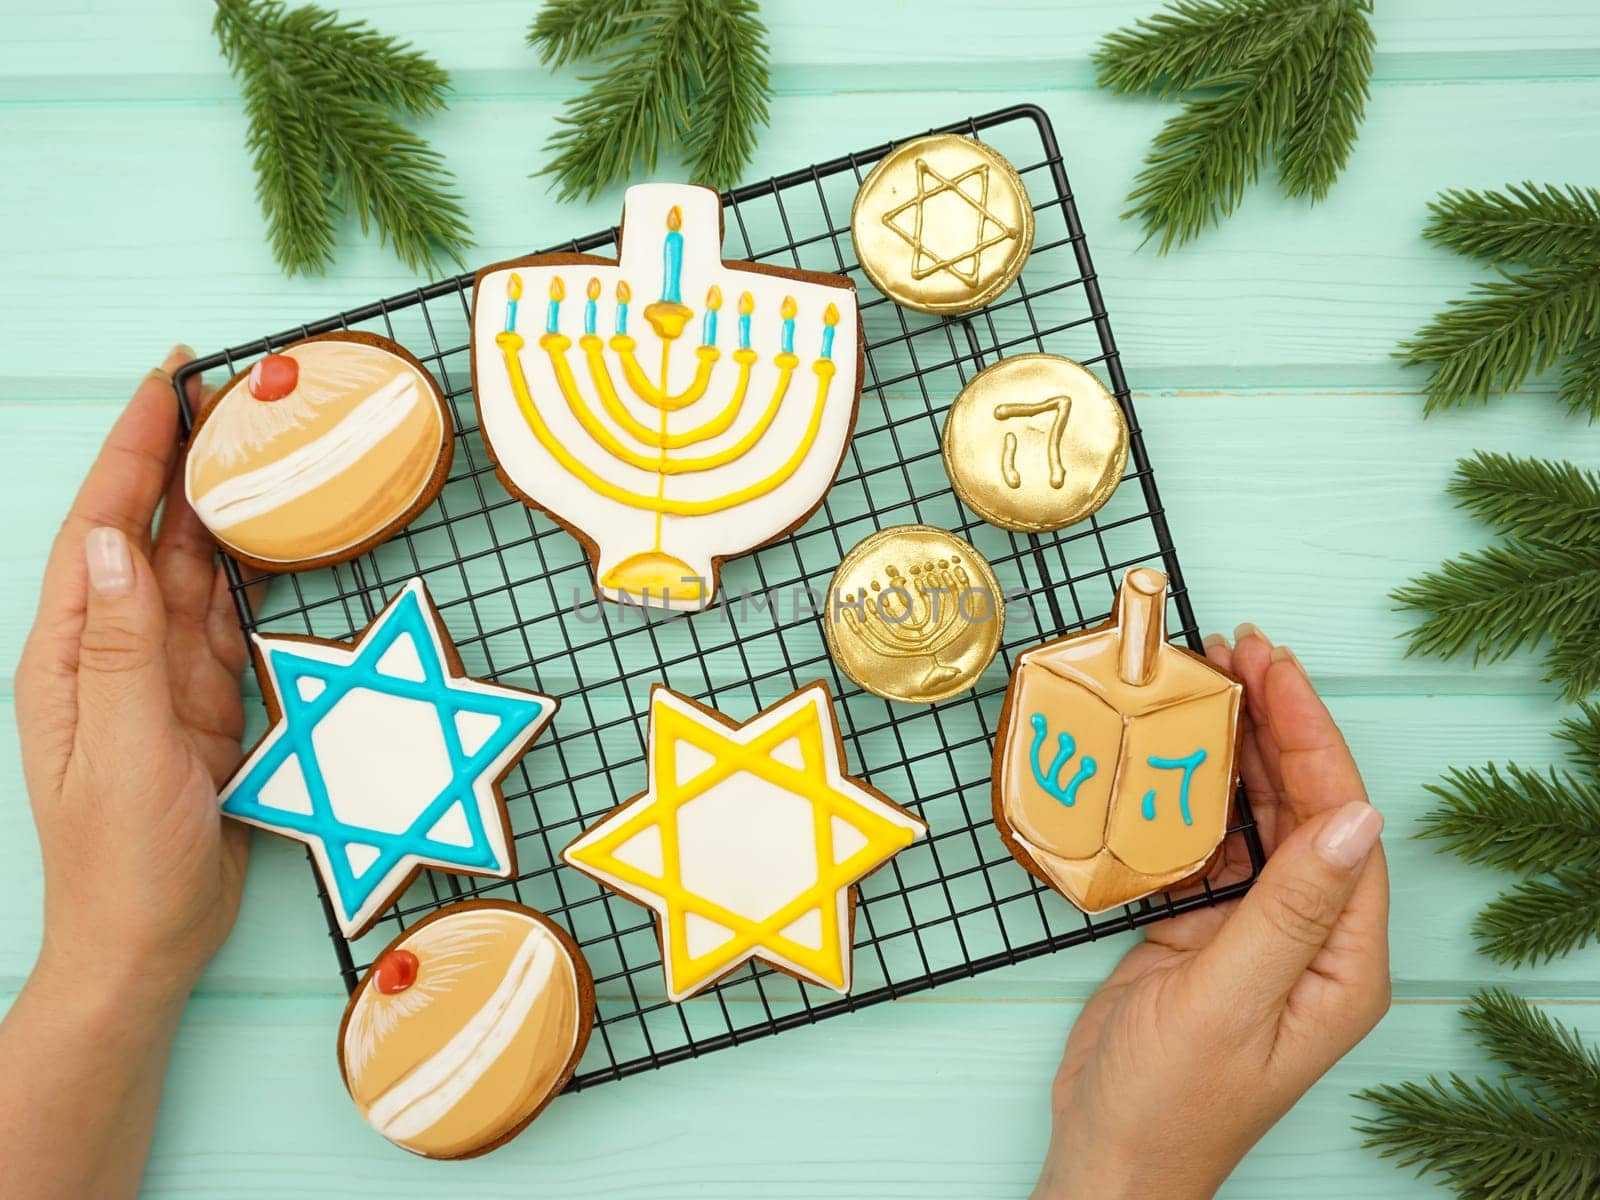 Celebrating Hanukkah. The concept of the Hanukkah holiday. by Spirina